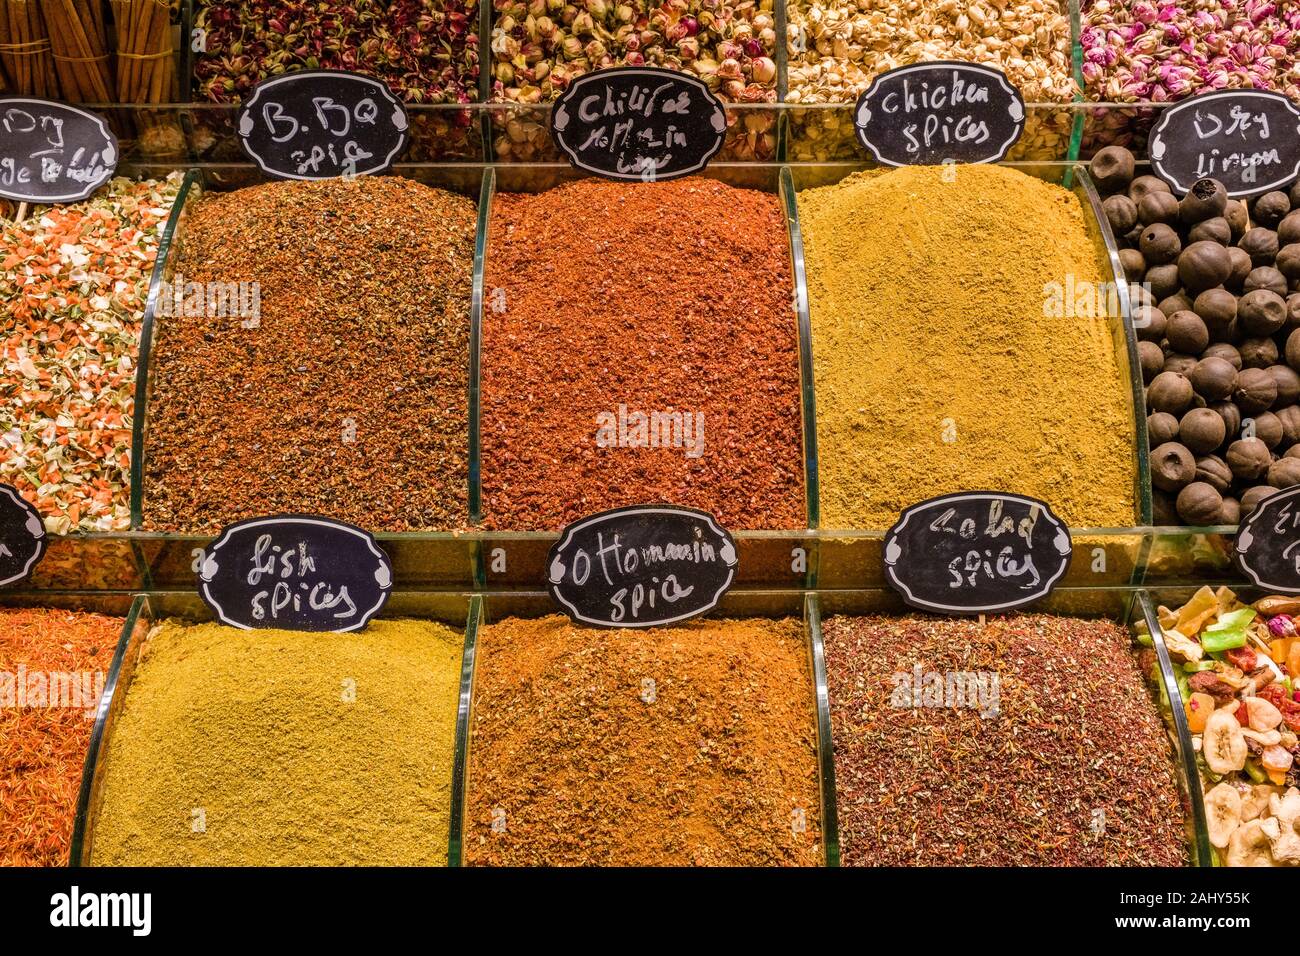 Big variety of different teas and spices are offered for sale inside the Spice Bazaar, Mısır Çarşısı, also known as Egyptian Bazaar Stock Photo